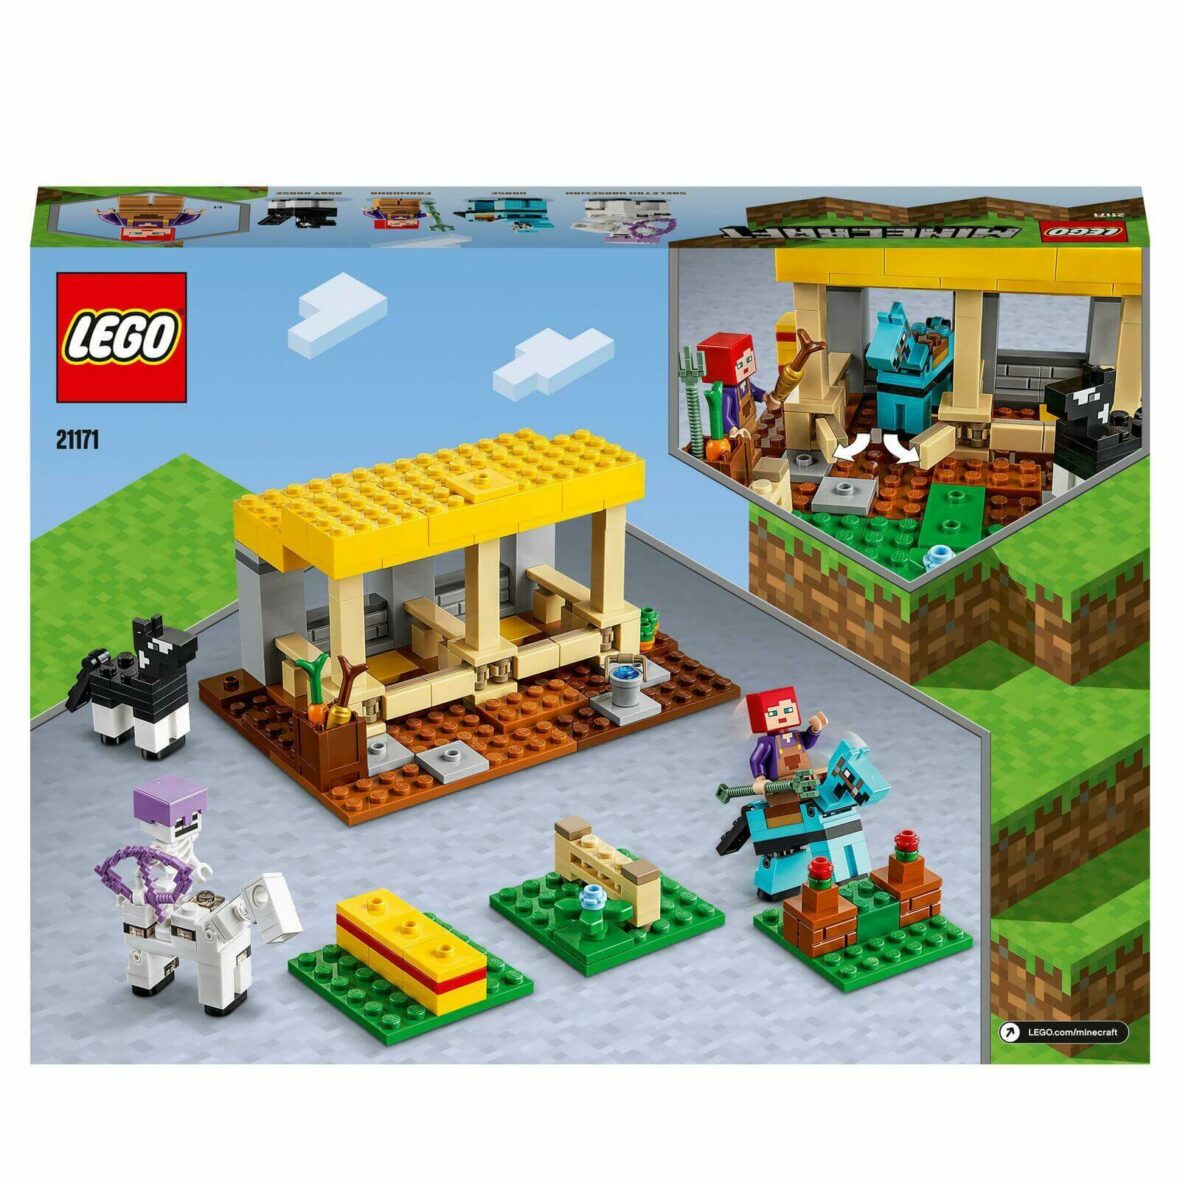 lecurie-jouet-ferme-minecraft-lego-21171_4